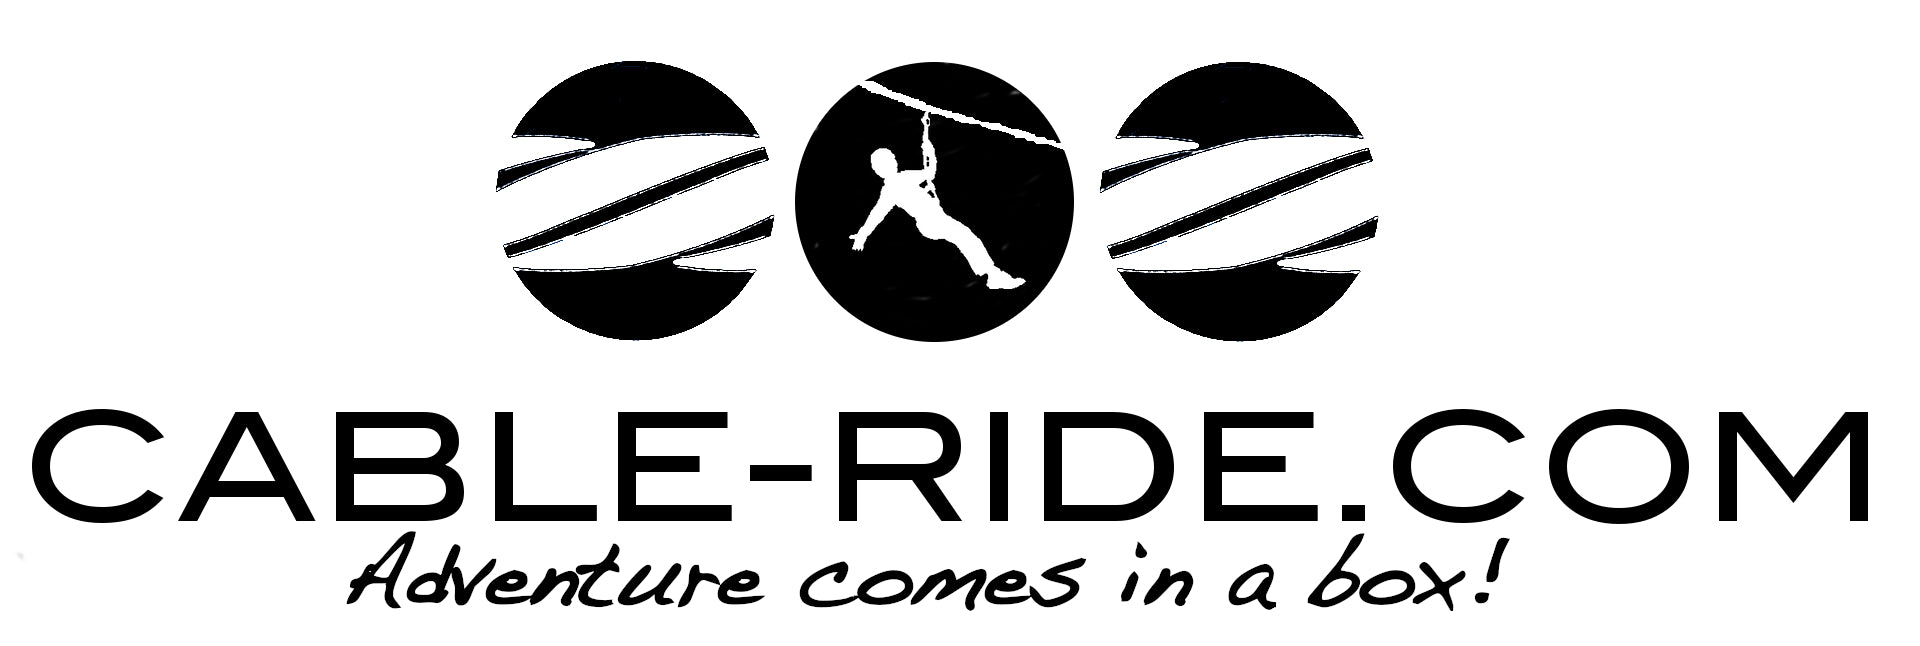 Cable-ride.com